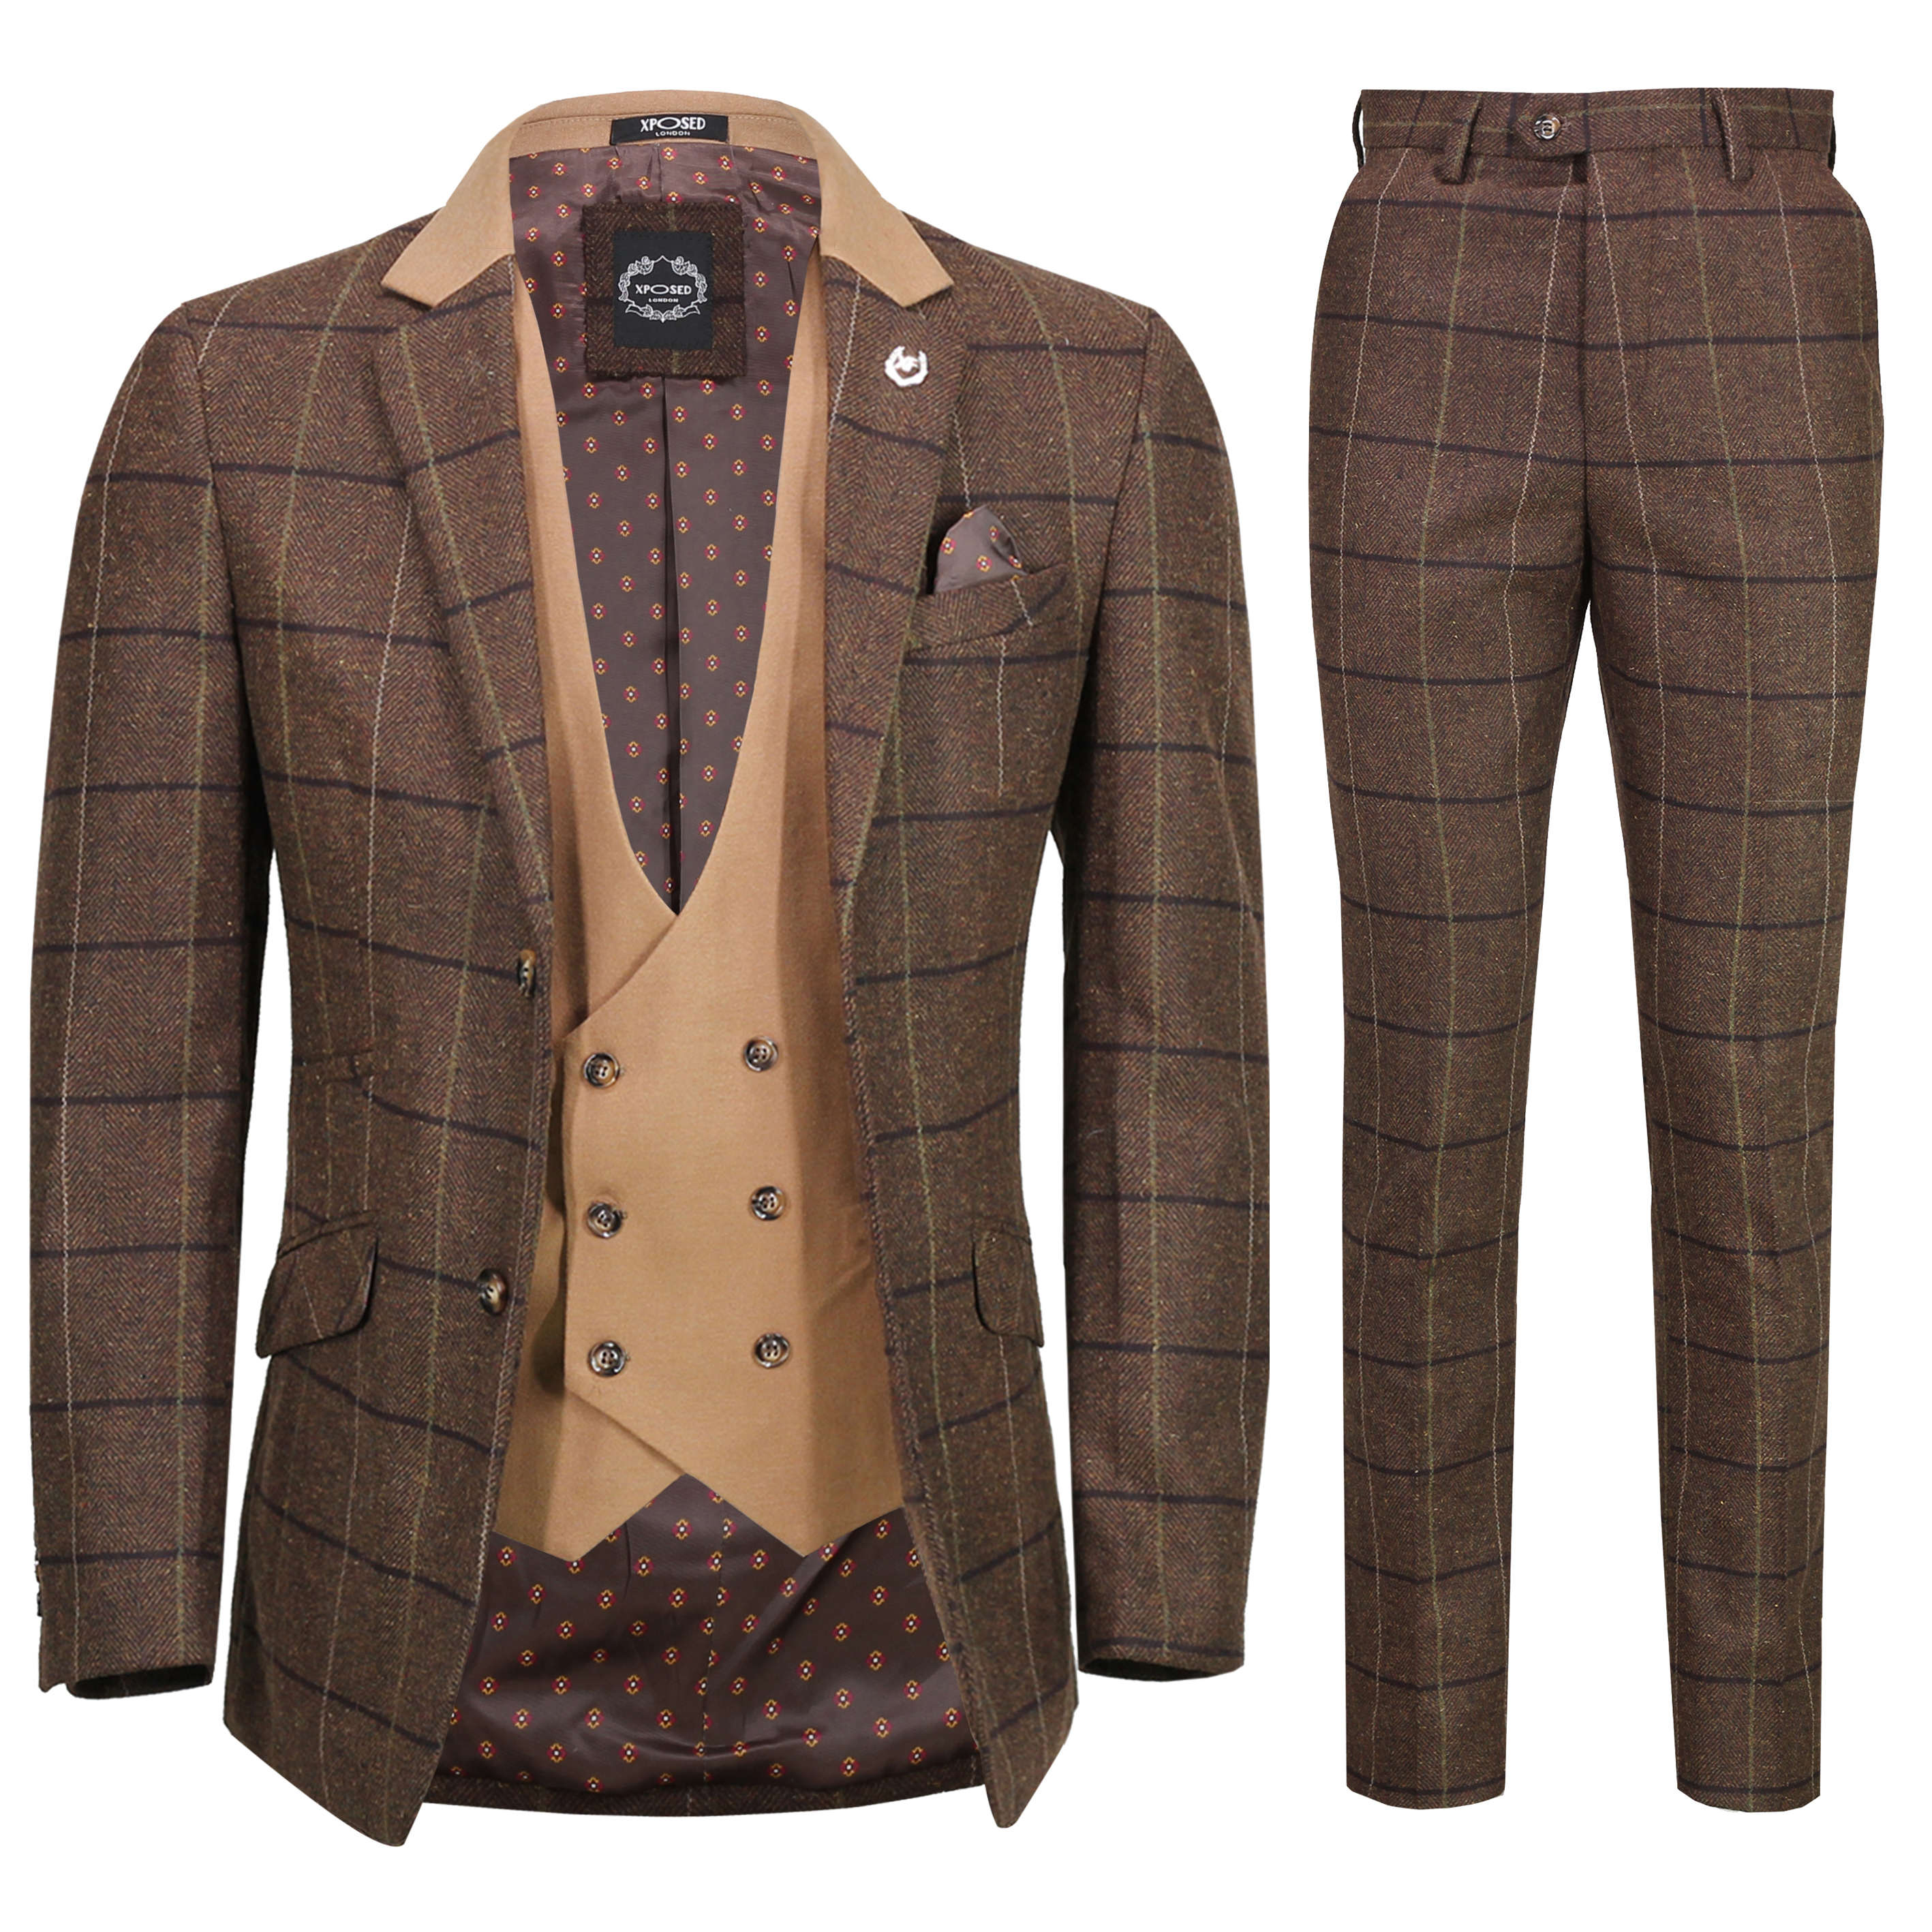 Mens Classic 3 Piece Tweed Suit Herringbone Brown Check Retro Smart Tailored Fit Ebay